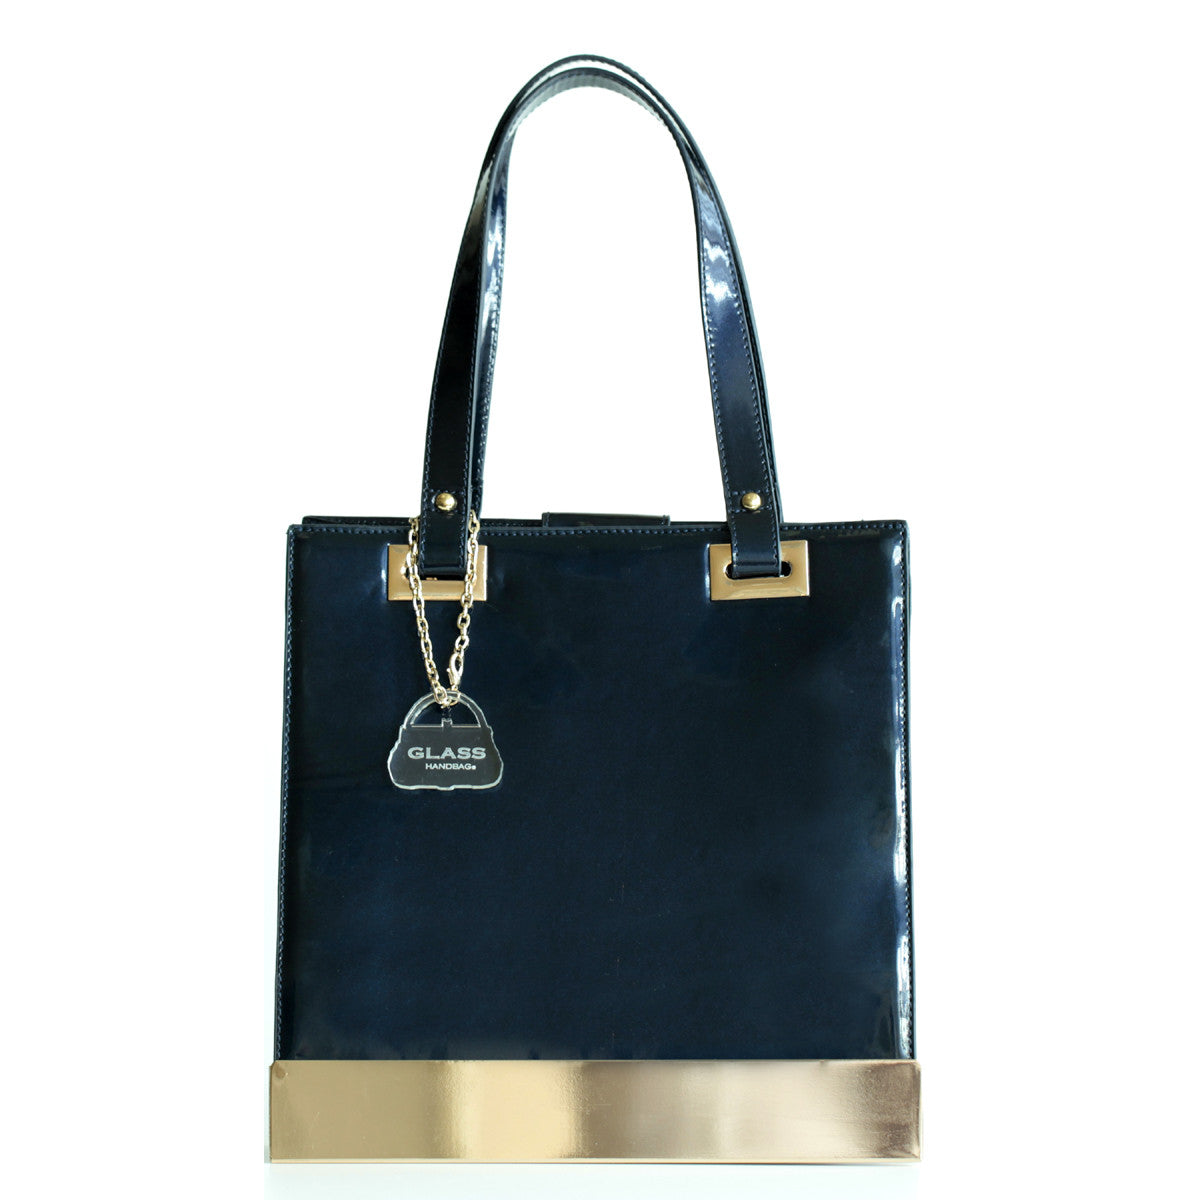 Glass Handbag Jewel Patent Shoulder Bag in Blue Sapphire